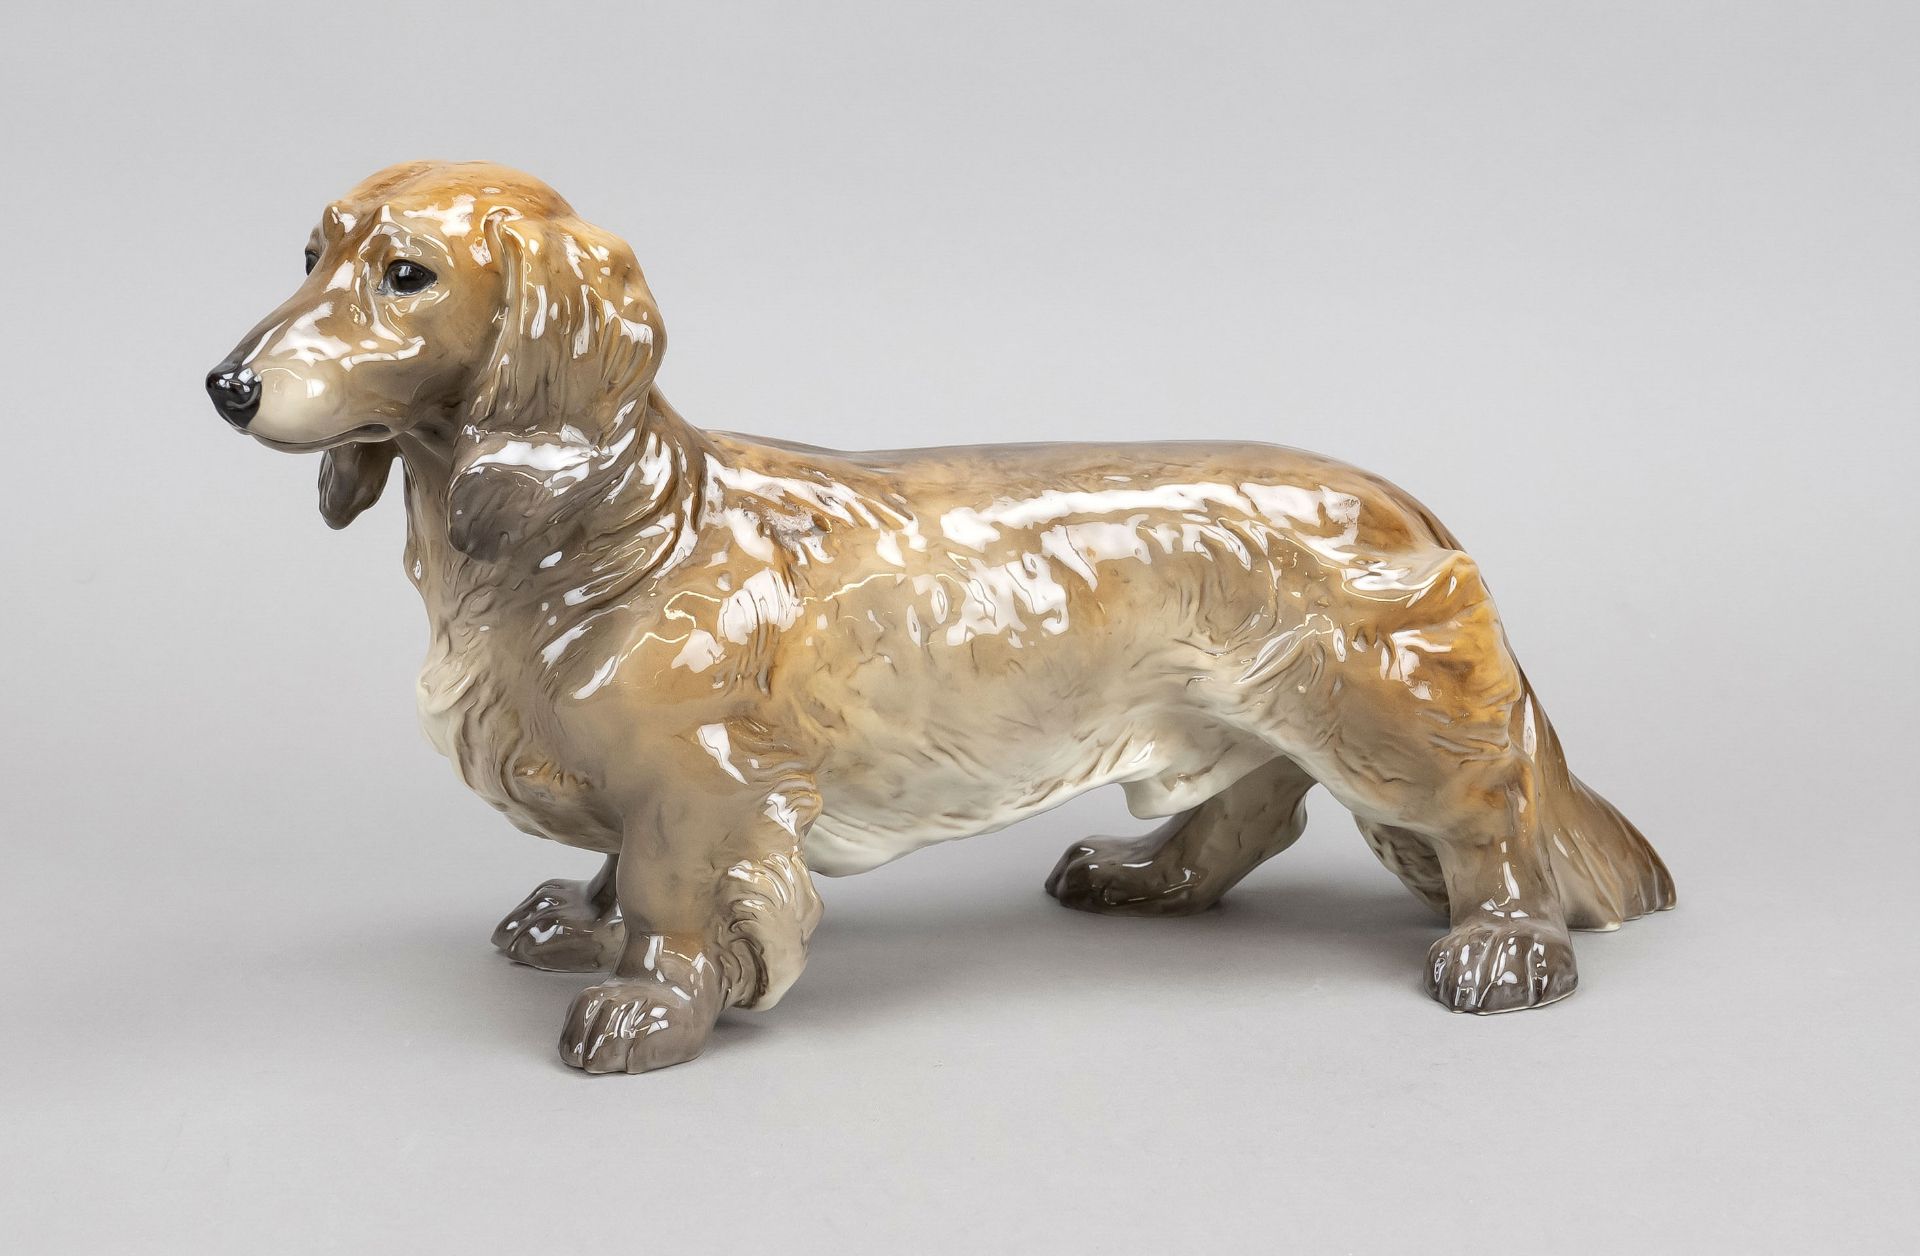 Long-haired dachshund, Allach, Bavaria, embossed mark ''SS Allach'', World War II, design by